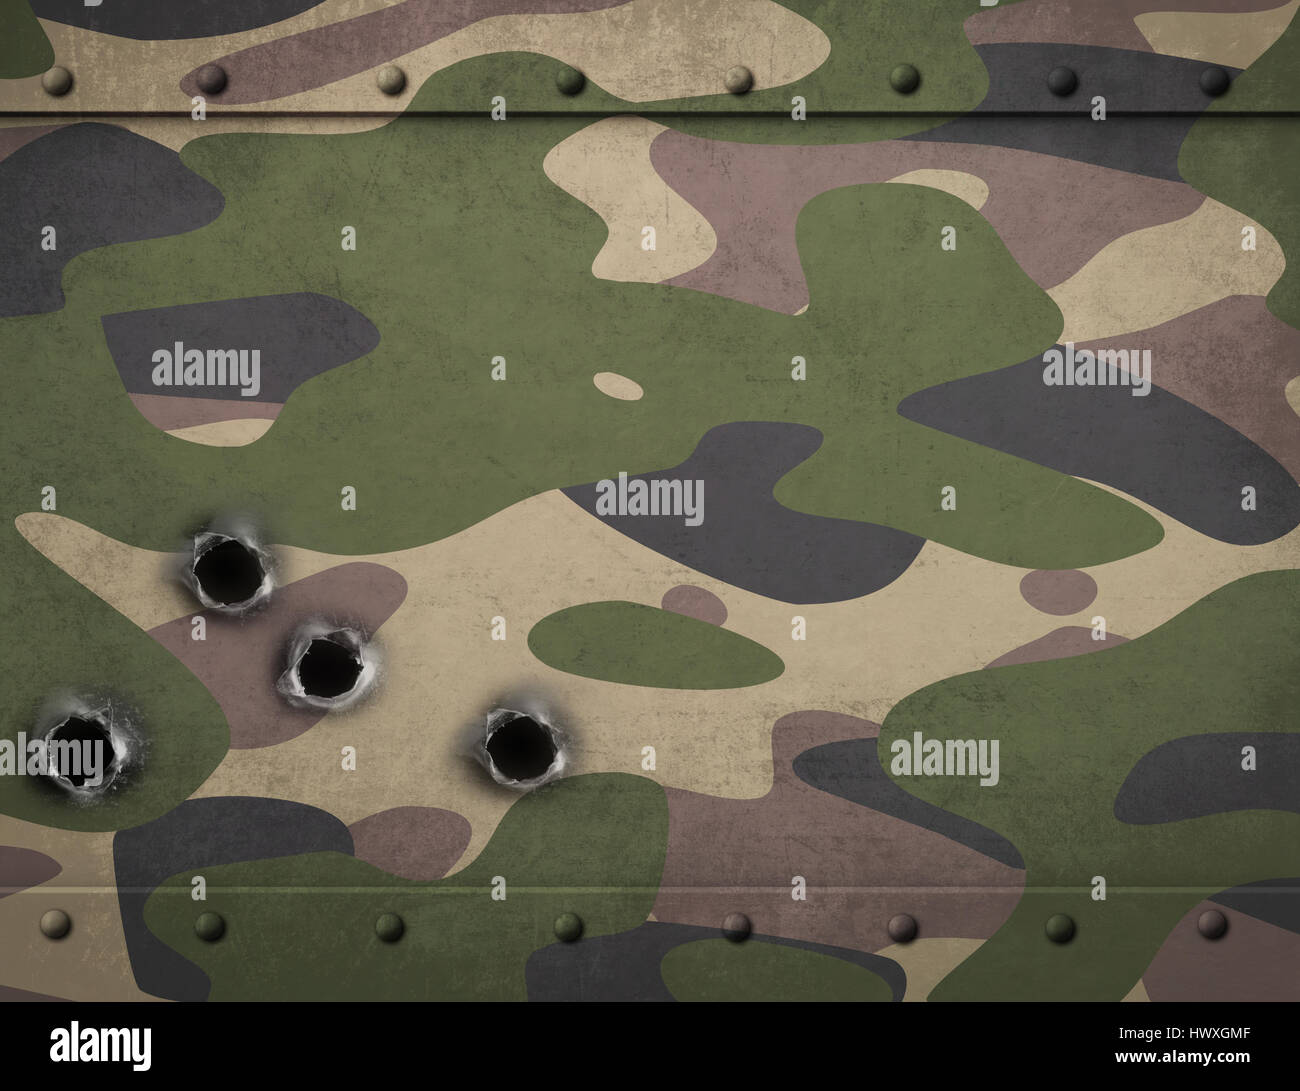 Armee Camouflage Metall Rüstung mit Kugel Löcher 3d illustration Stockfoto